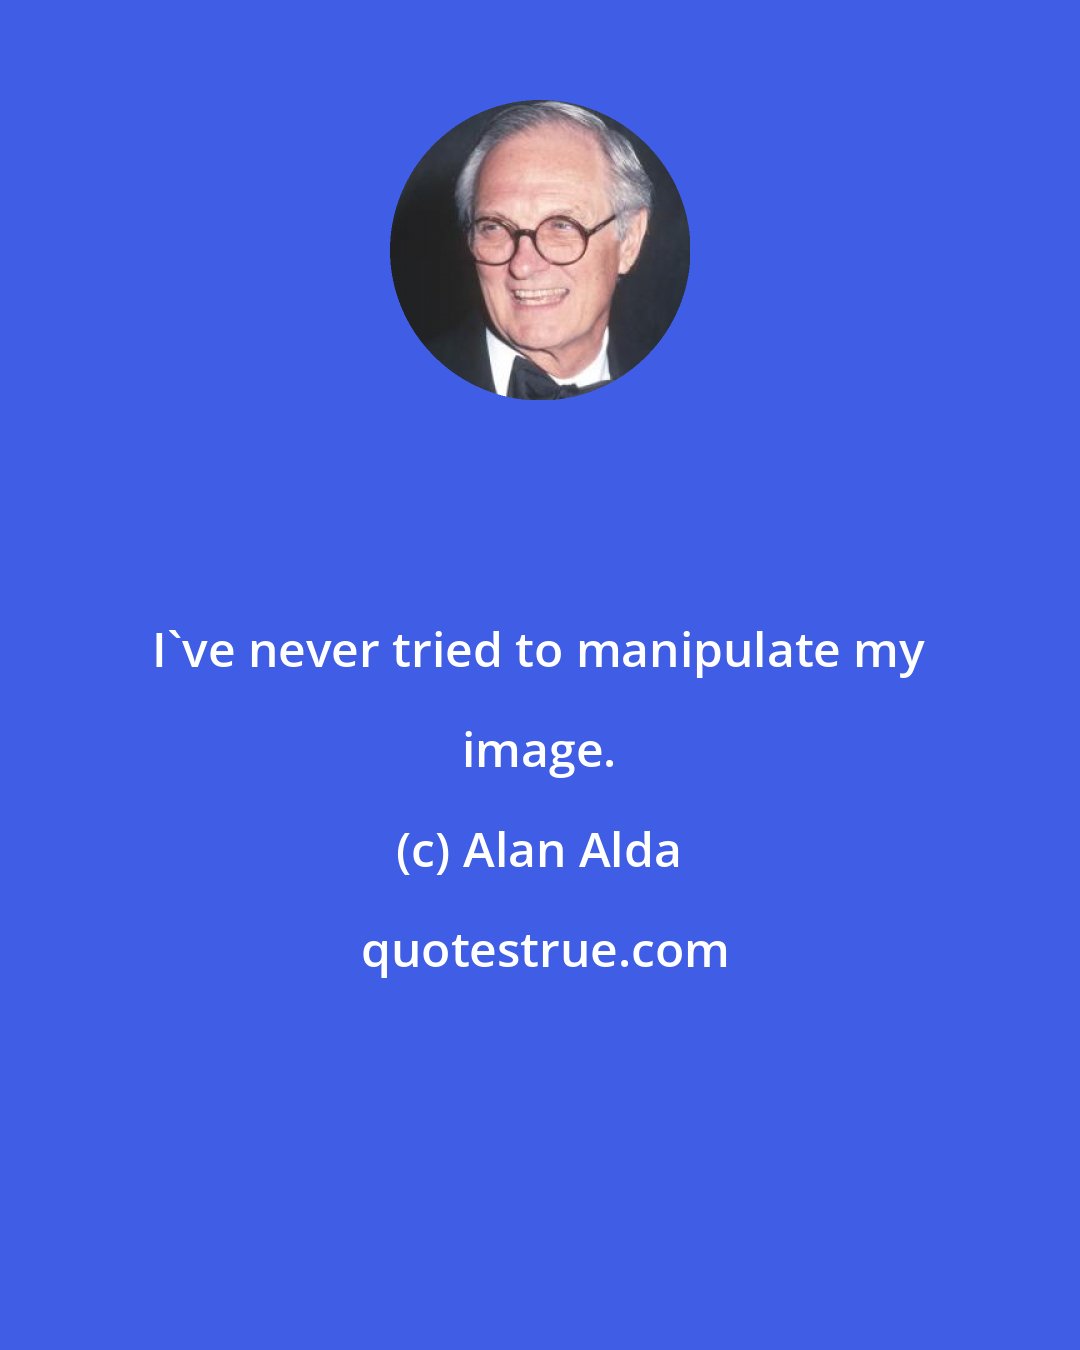 Alan Alda: I've never tried to manipulate my image.